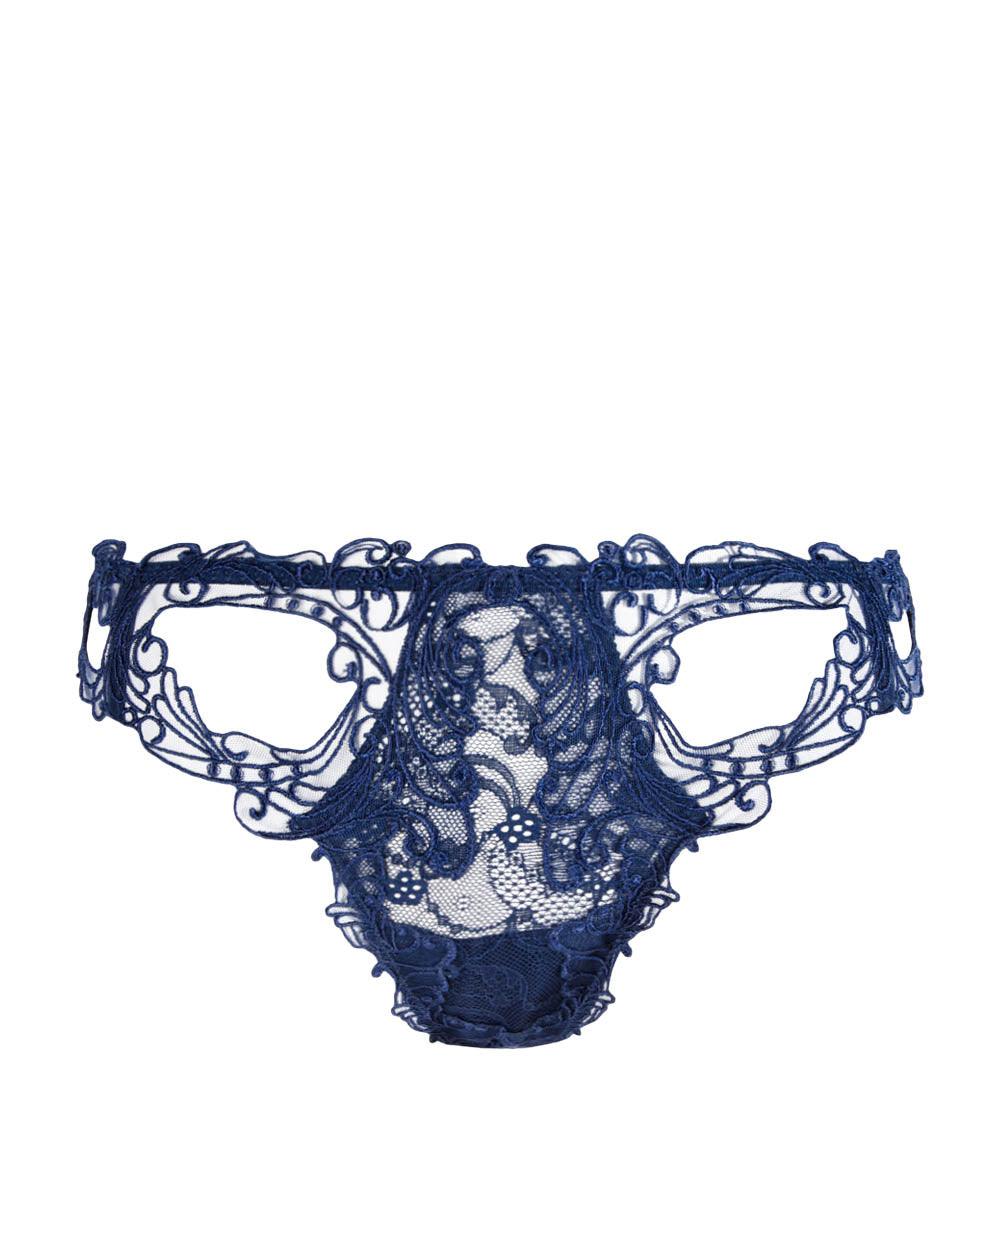 Shop Generic Romantic Sexy G-string Transparent Lace Underwear